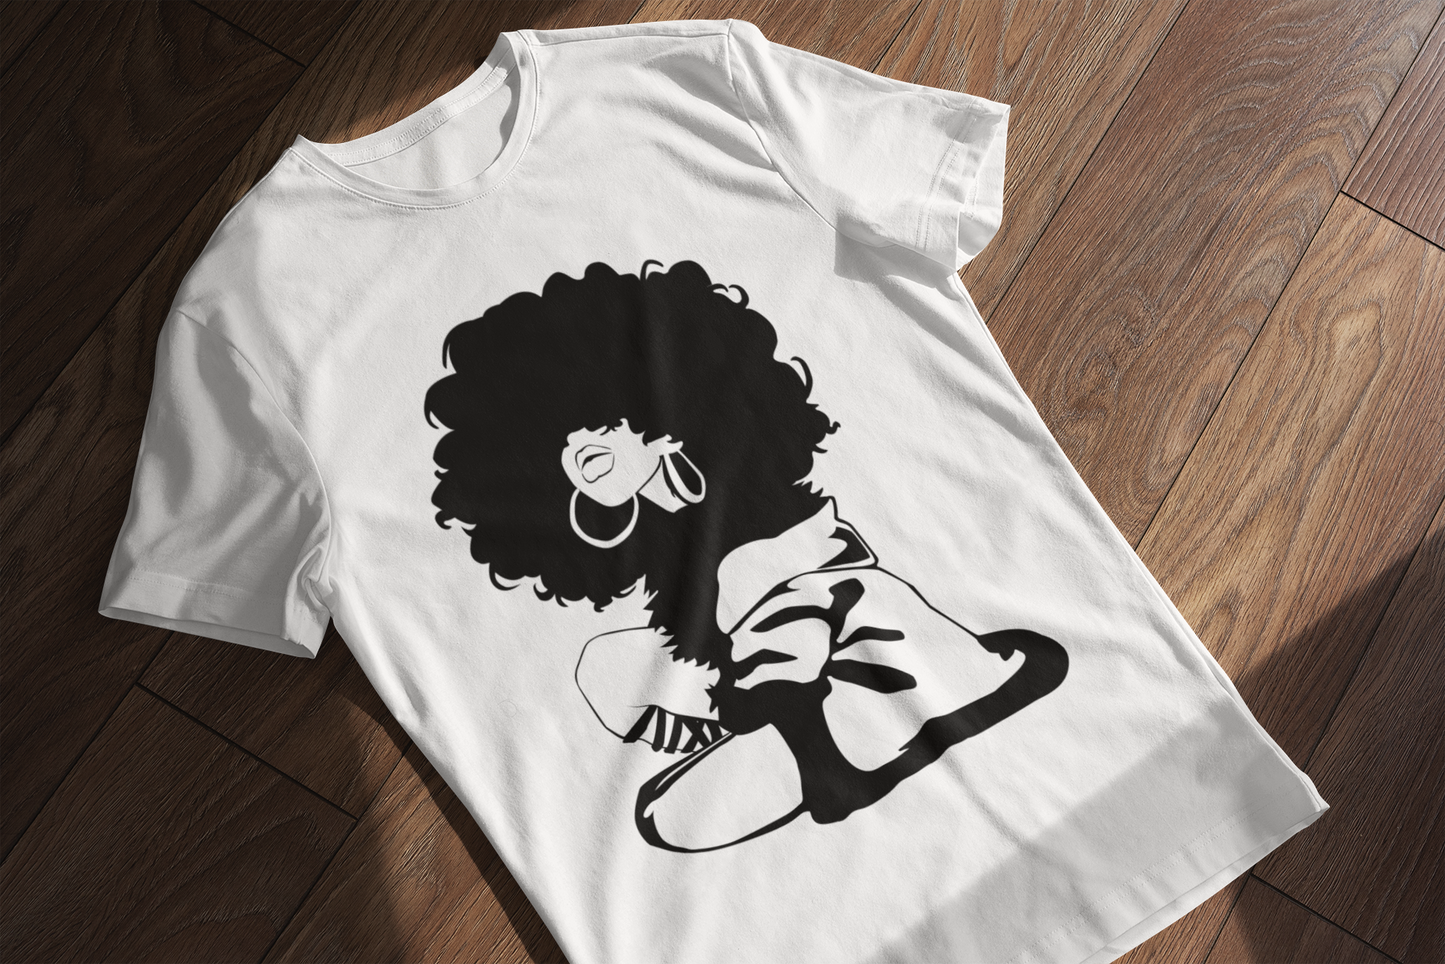 Black Woman Silhouette T-shirt